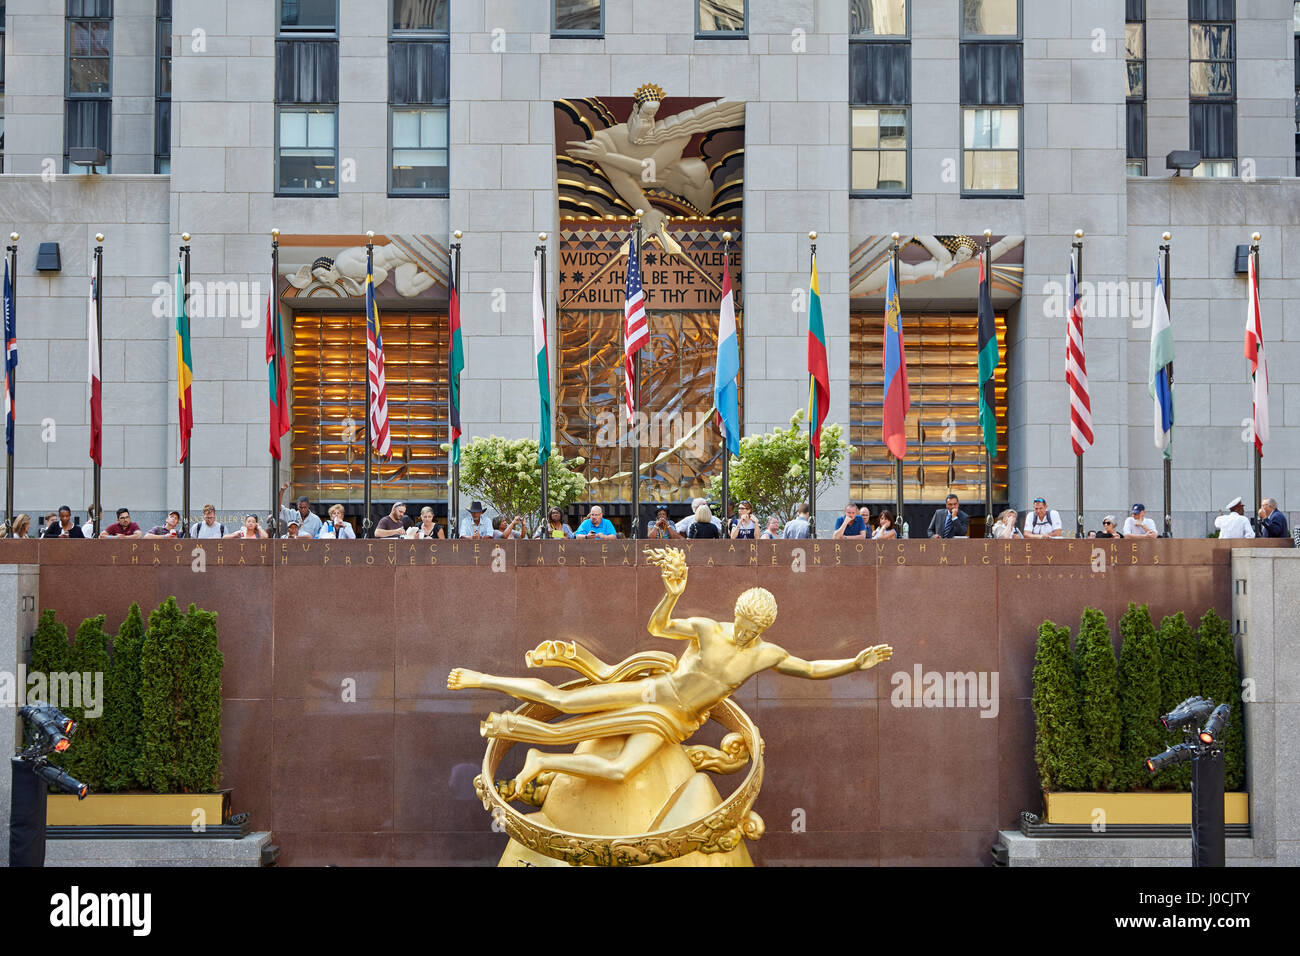 NEW YORK - SEPTEMBER 12: Rockefeller Center mit goldener Prometheus-Statue und Menschen am 12. September 2017 in New York Stockfoto